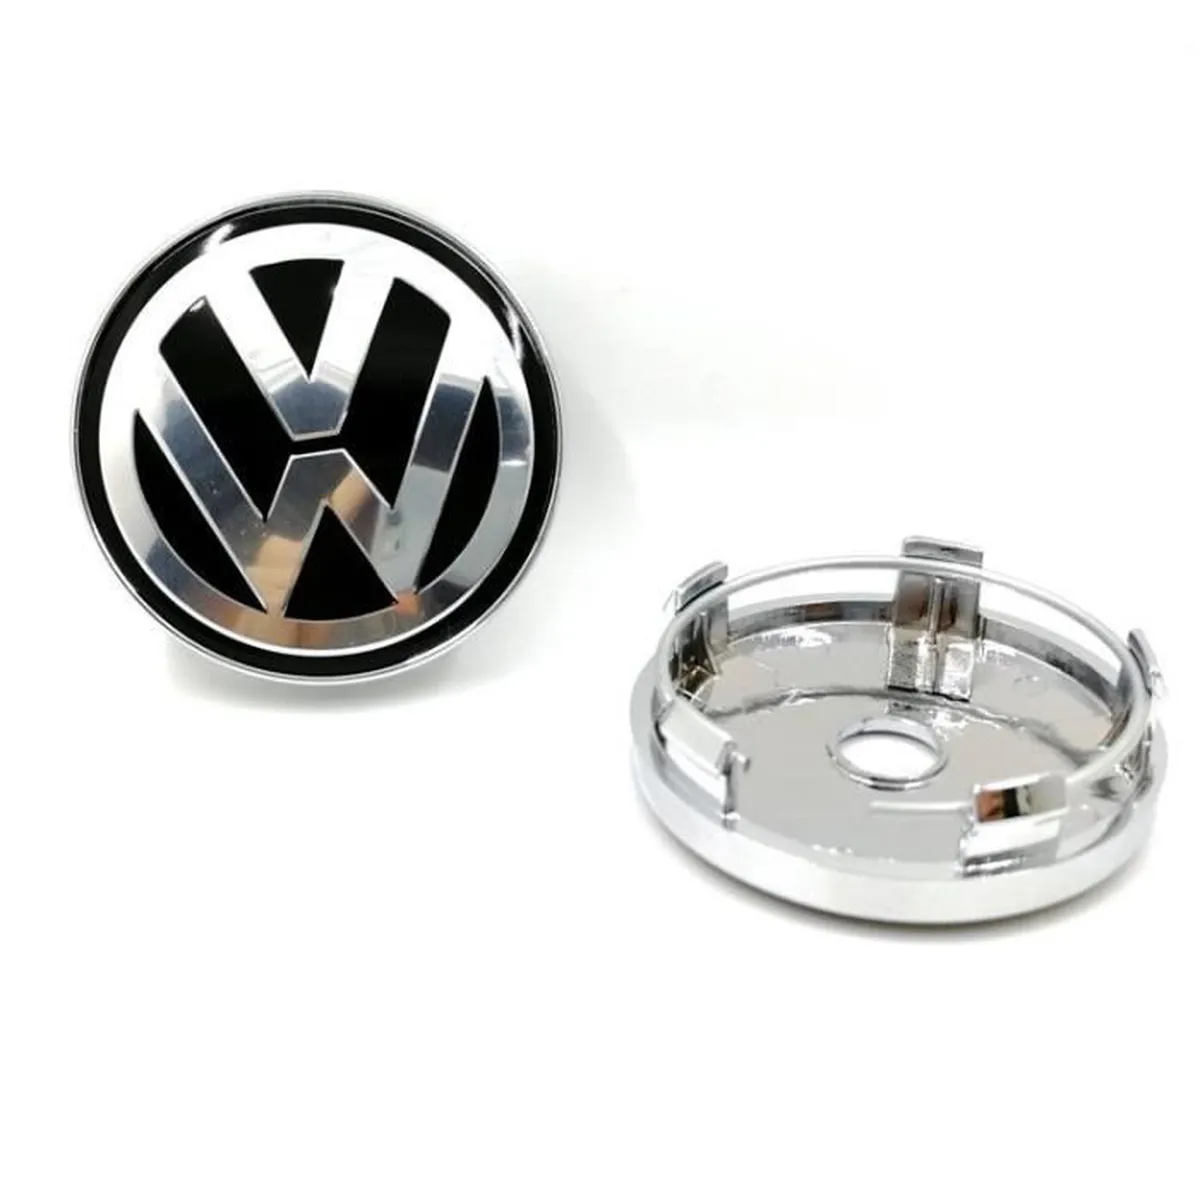 Cache moyeu VW volkswagen - centre de roue - 55mm